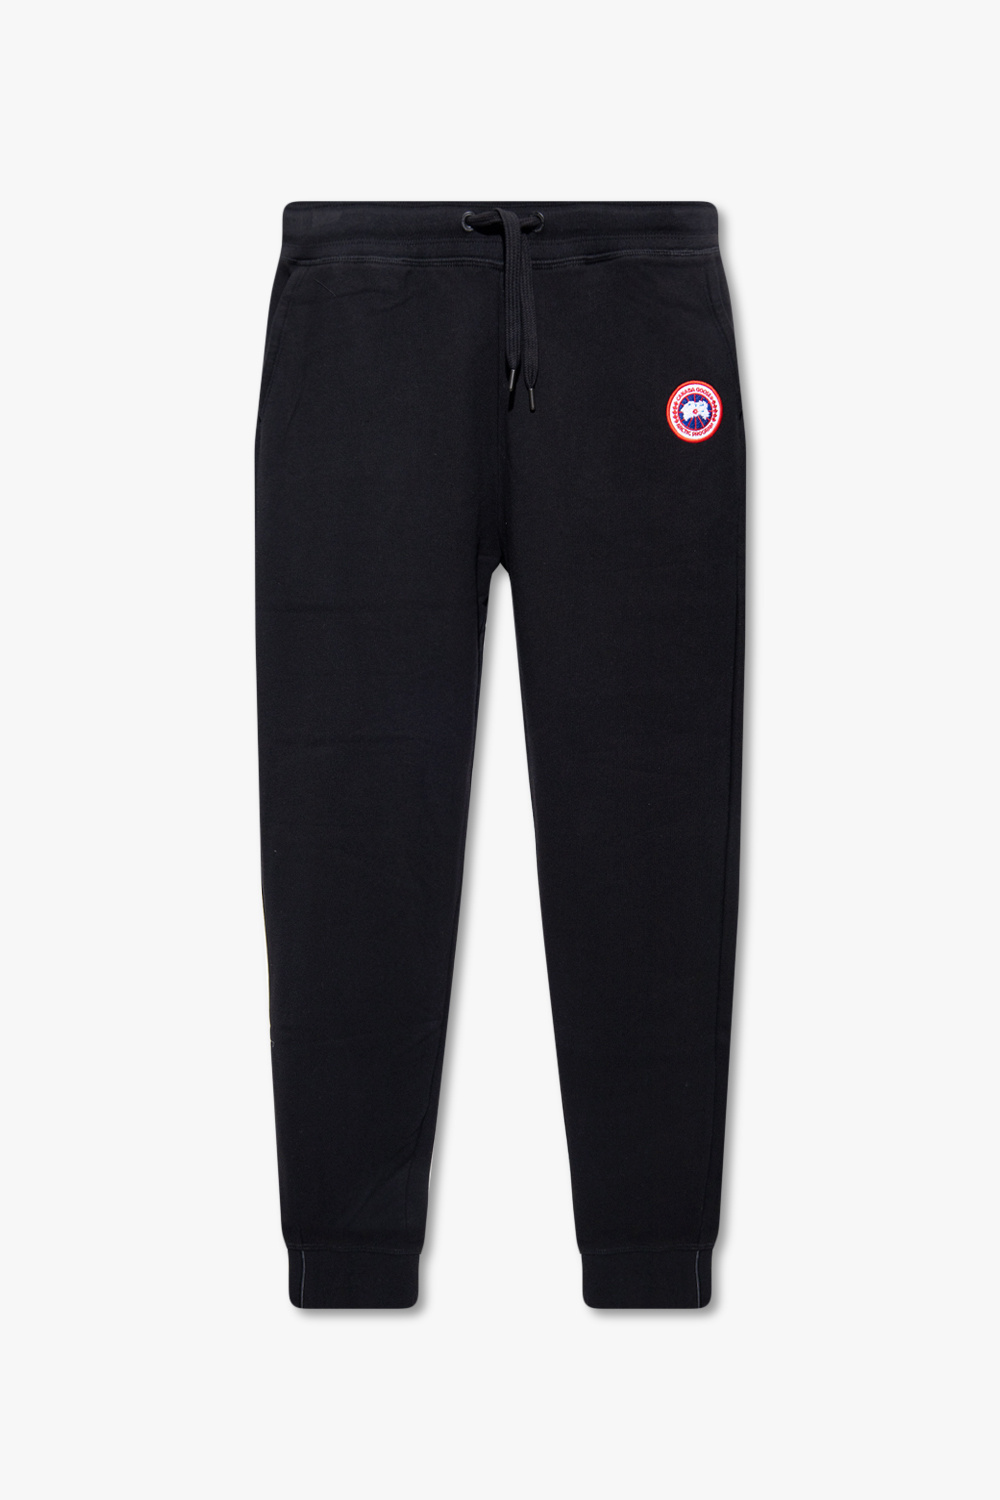 Black Sweatpants with logo Canada Goose - Vitkac Canada